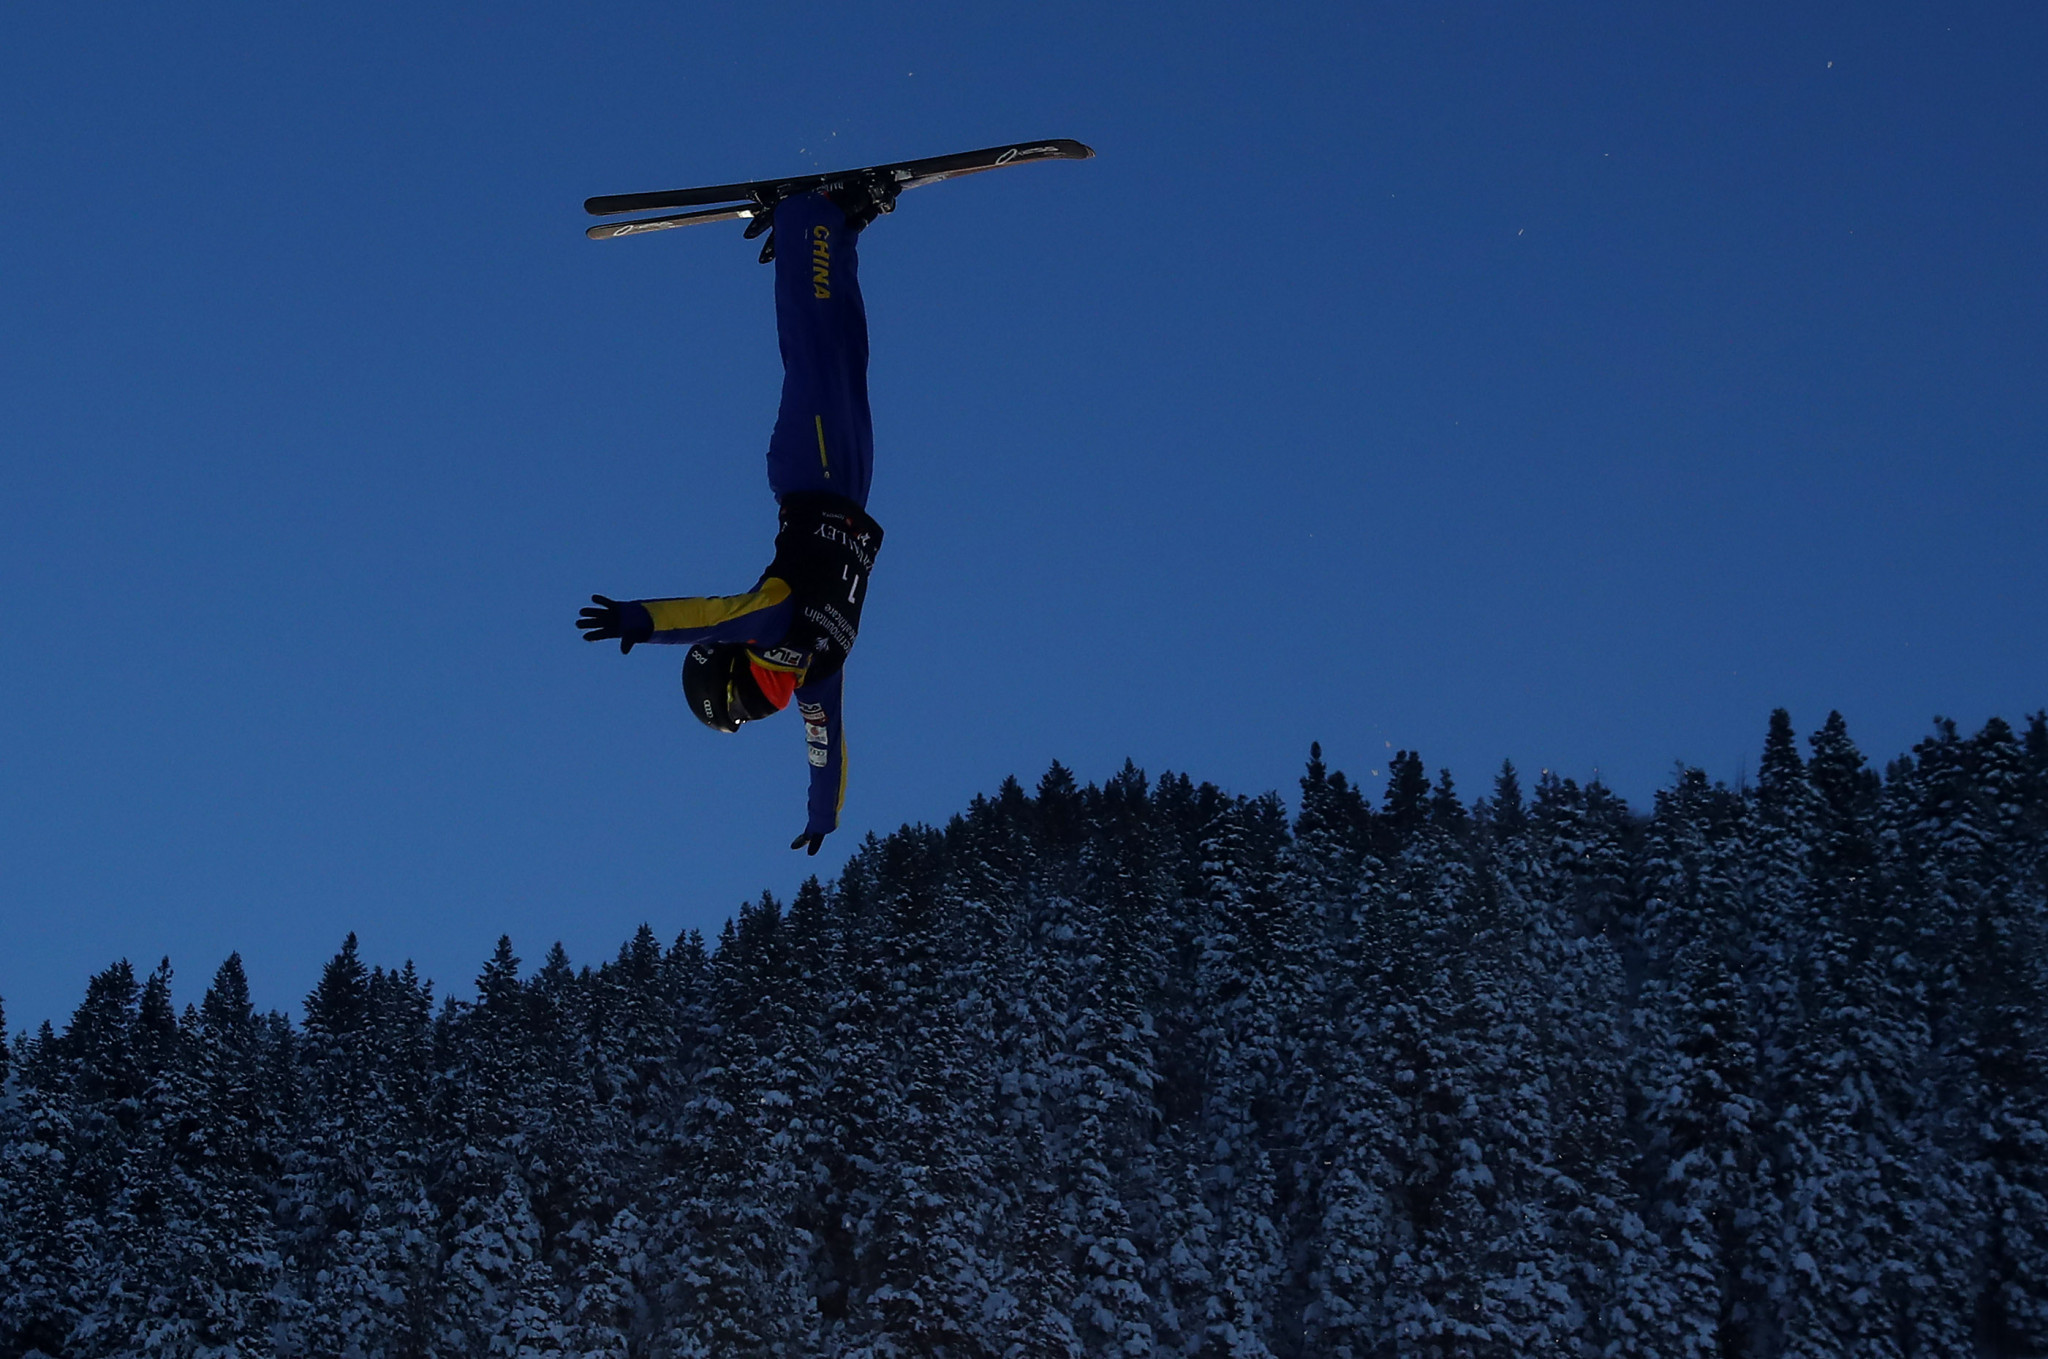 Freestyle Ski Aerials season set for takeoff in China